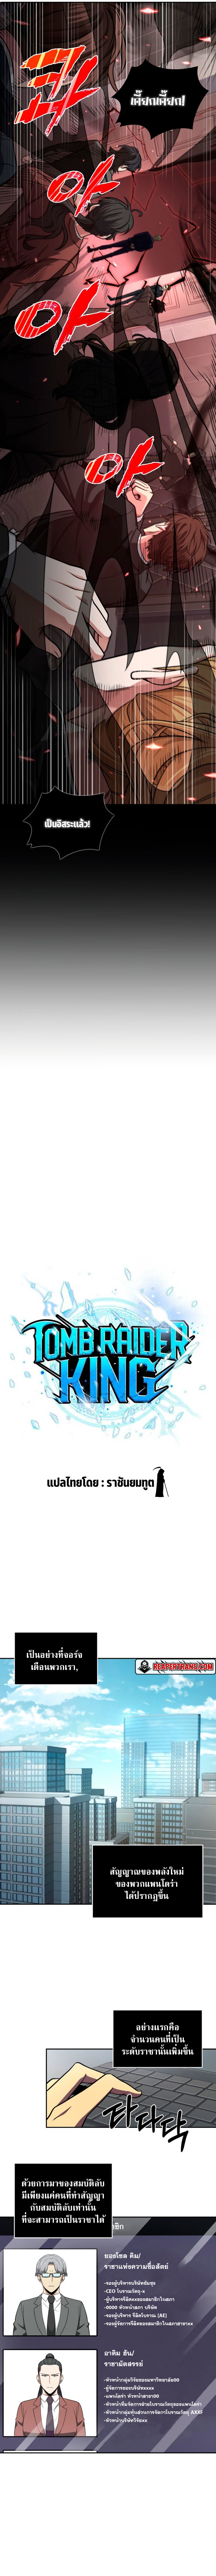 Tomb Raider King 249 03